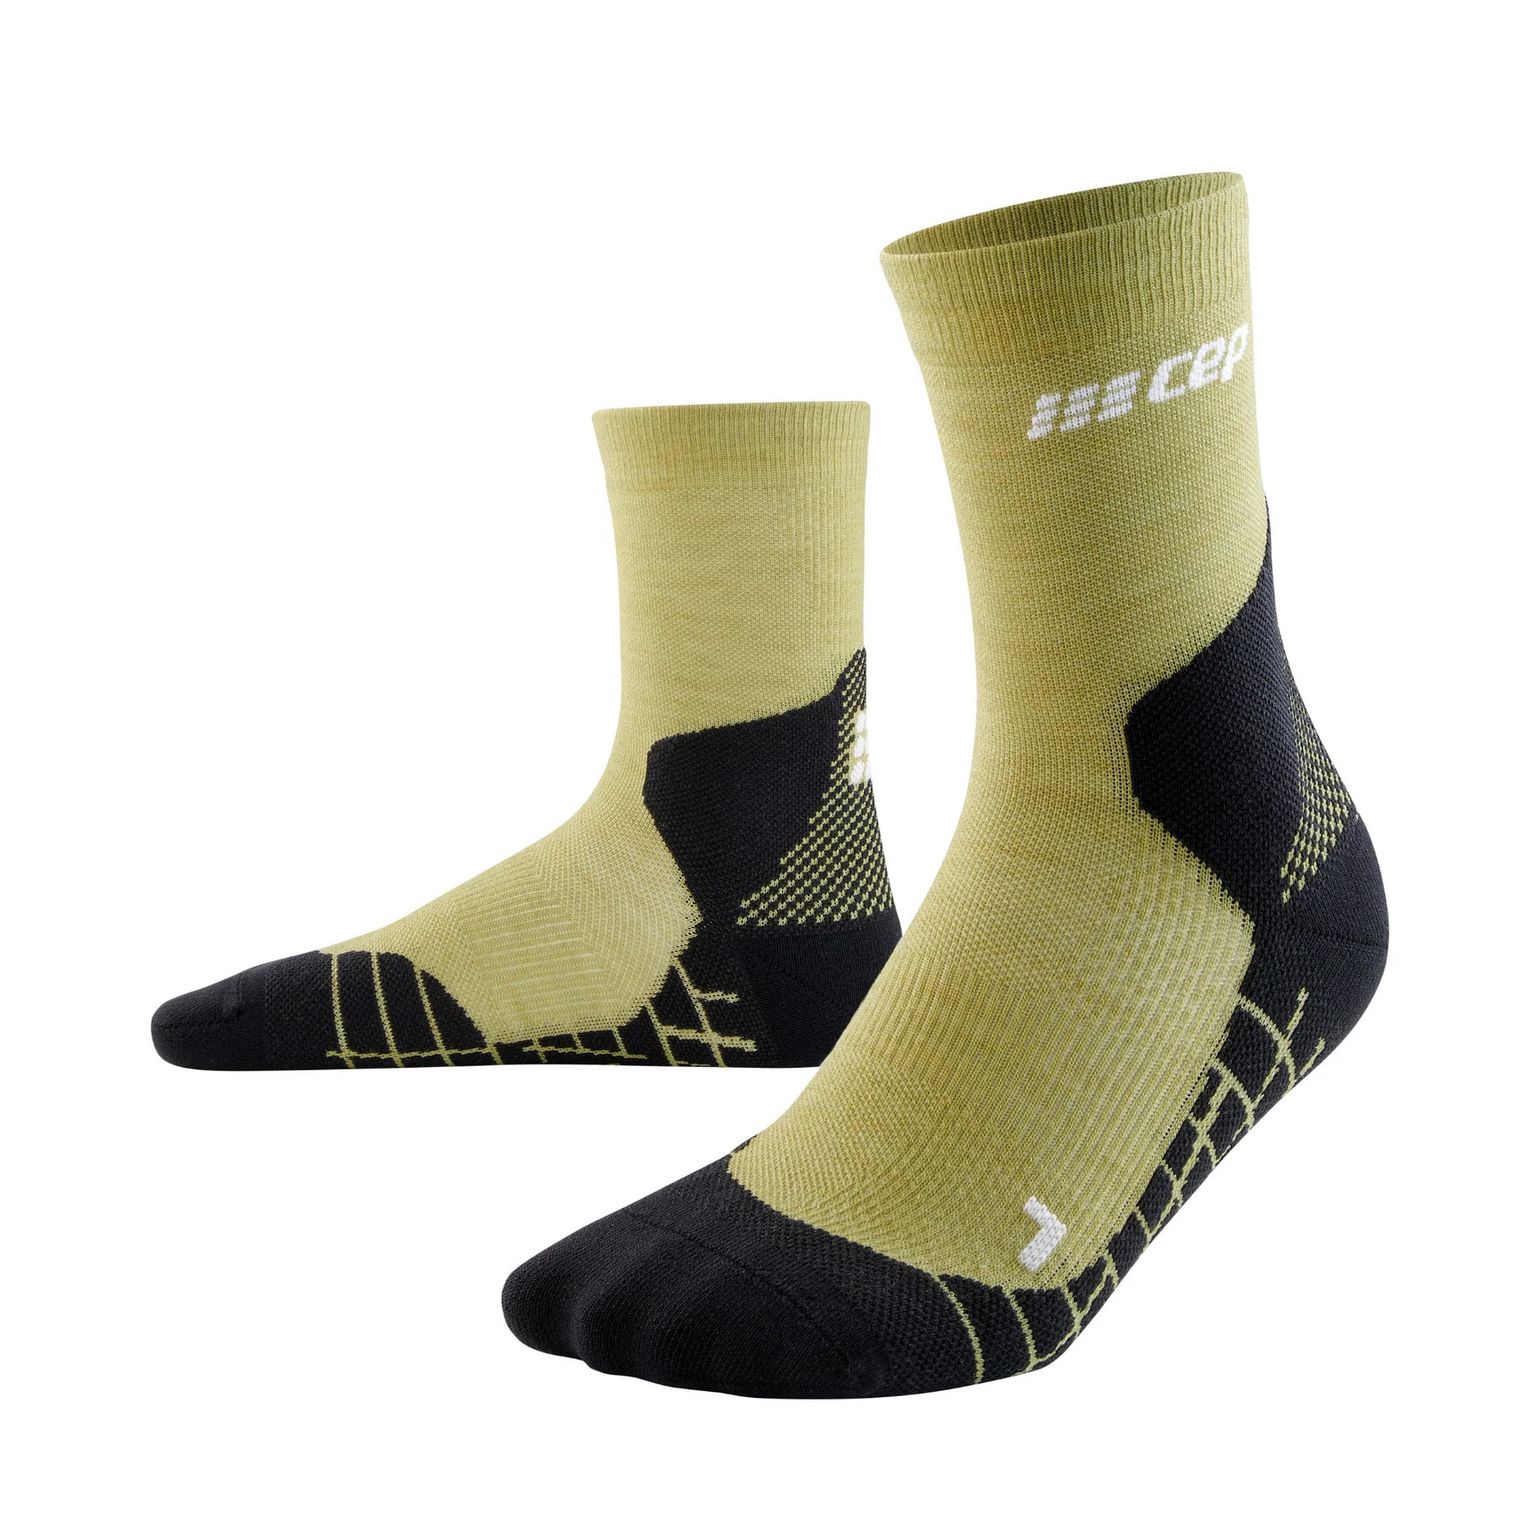 CEP Men's Hiking Light Merino Mid Cut Compression Socks Light Olive